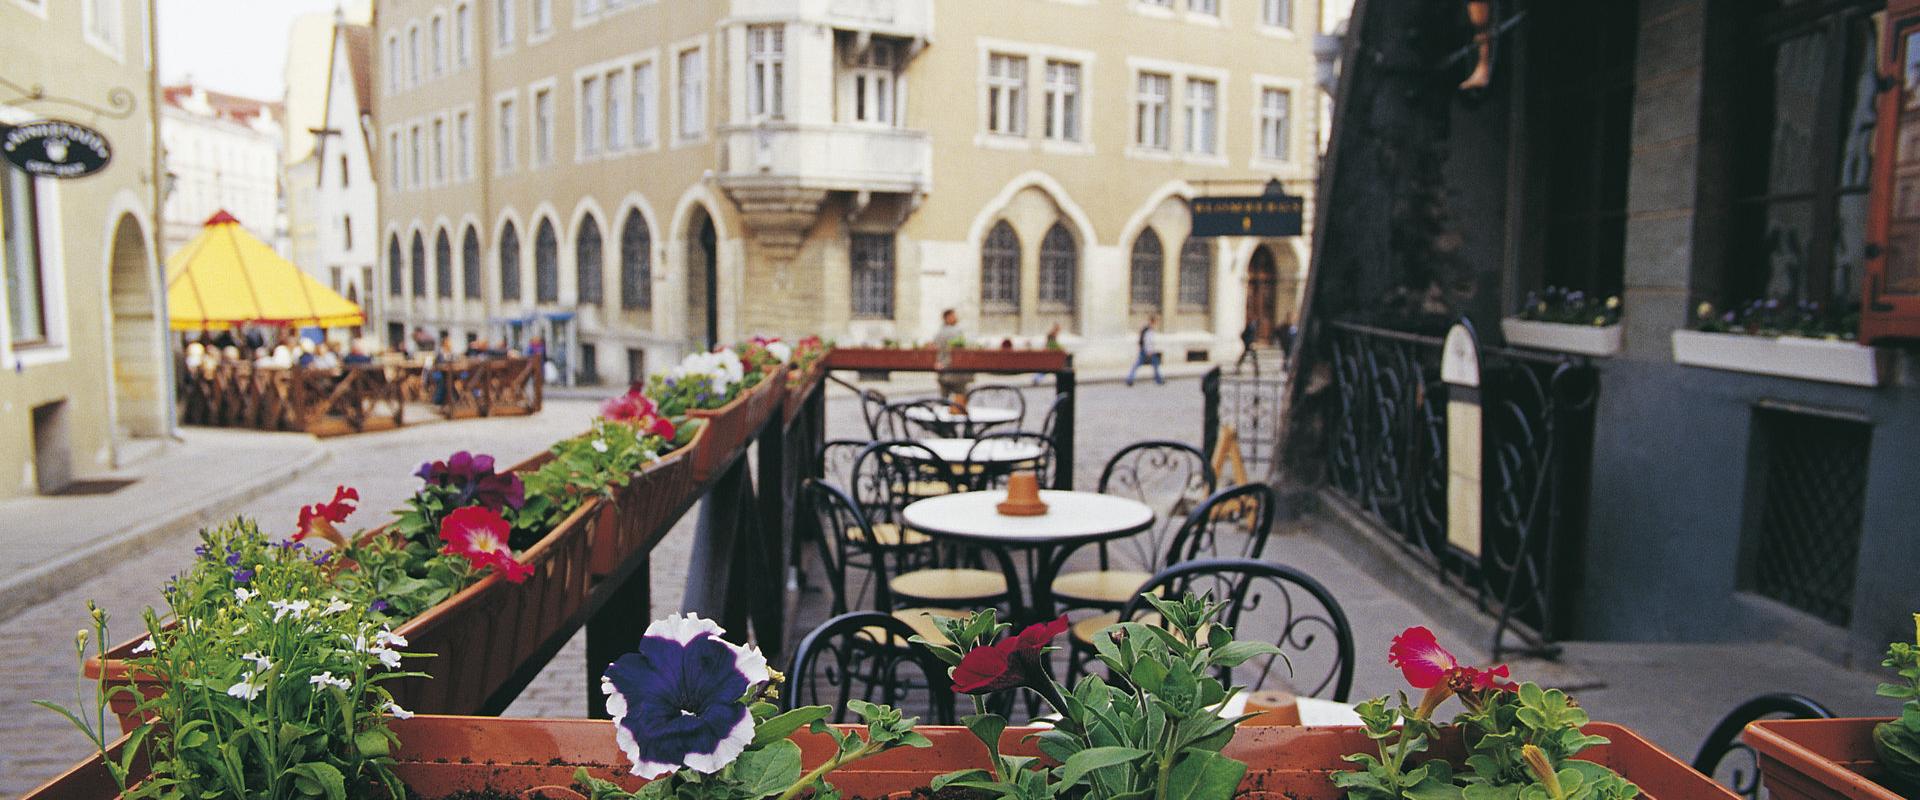 Flower boxes, terrace, cafe